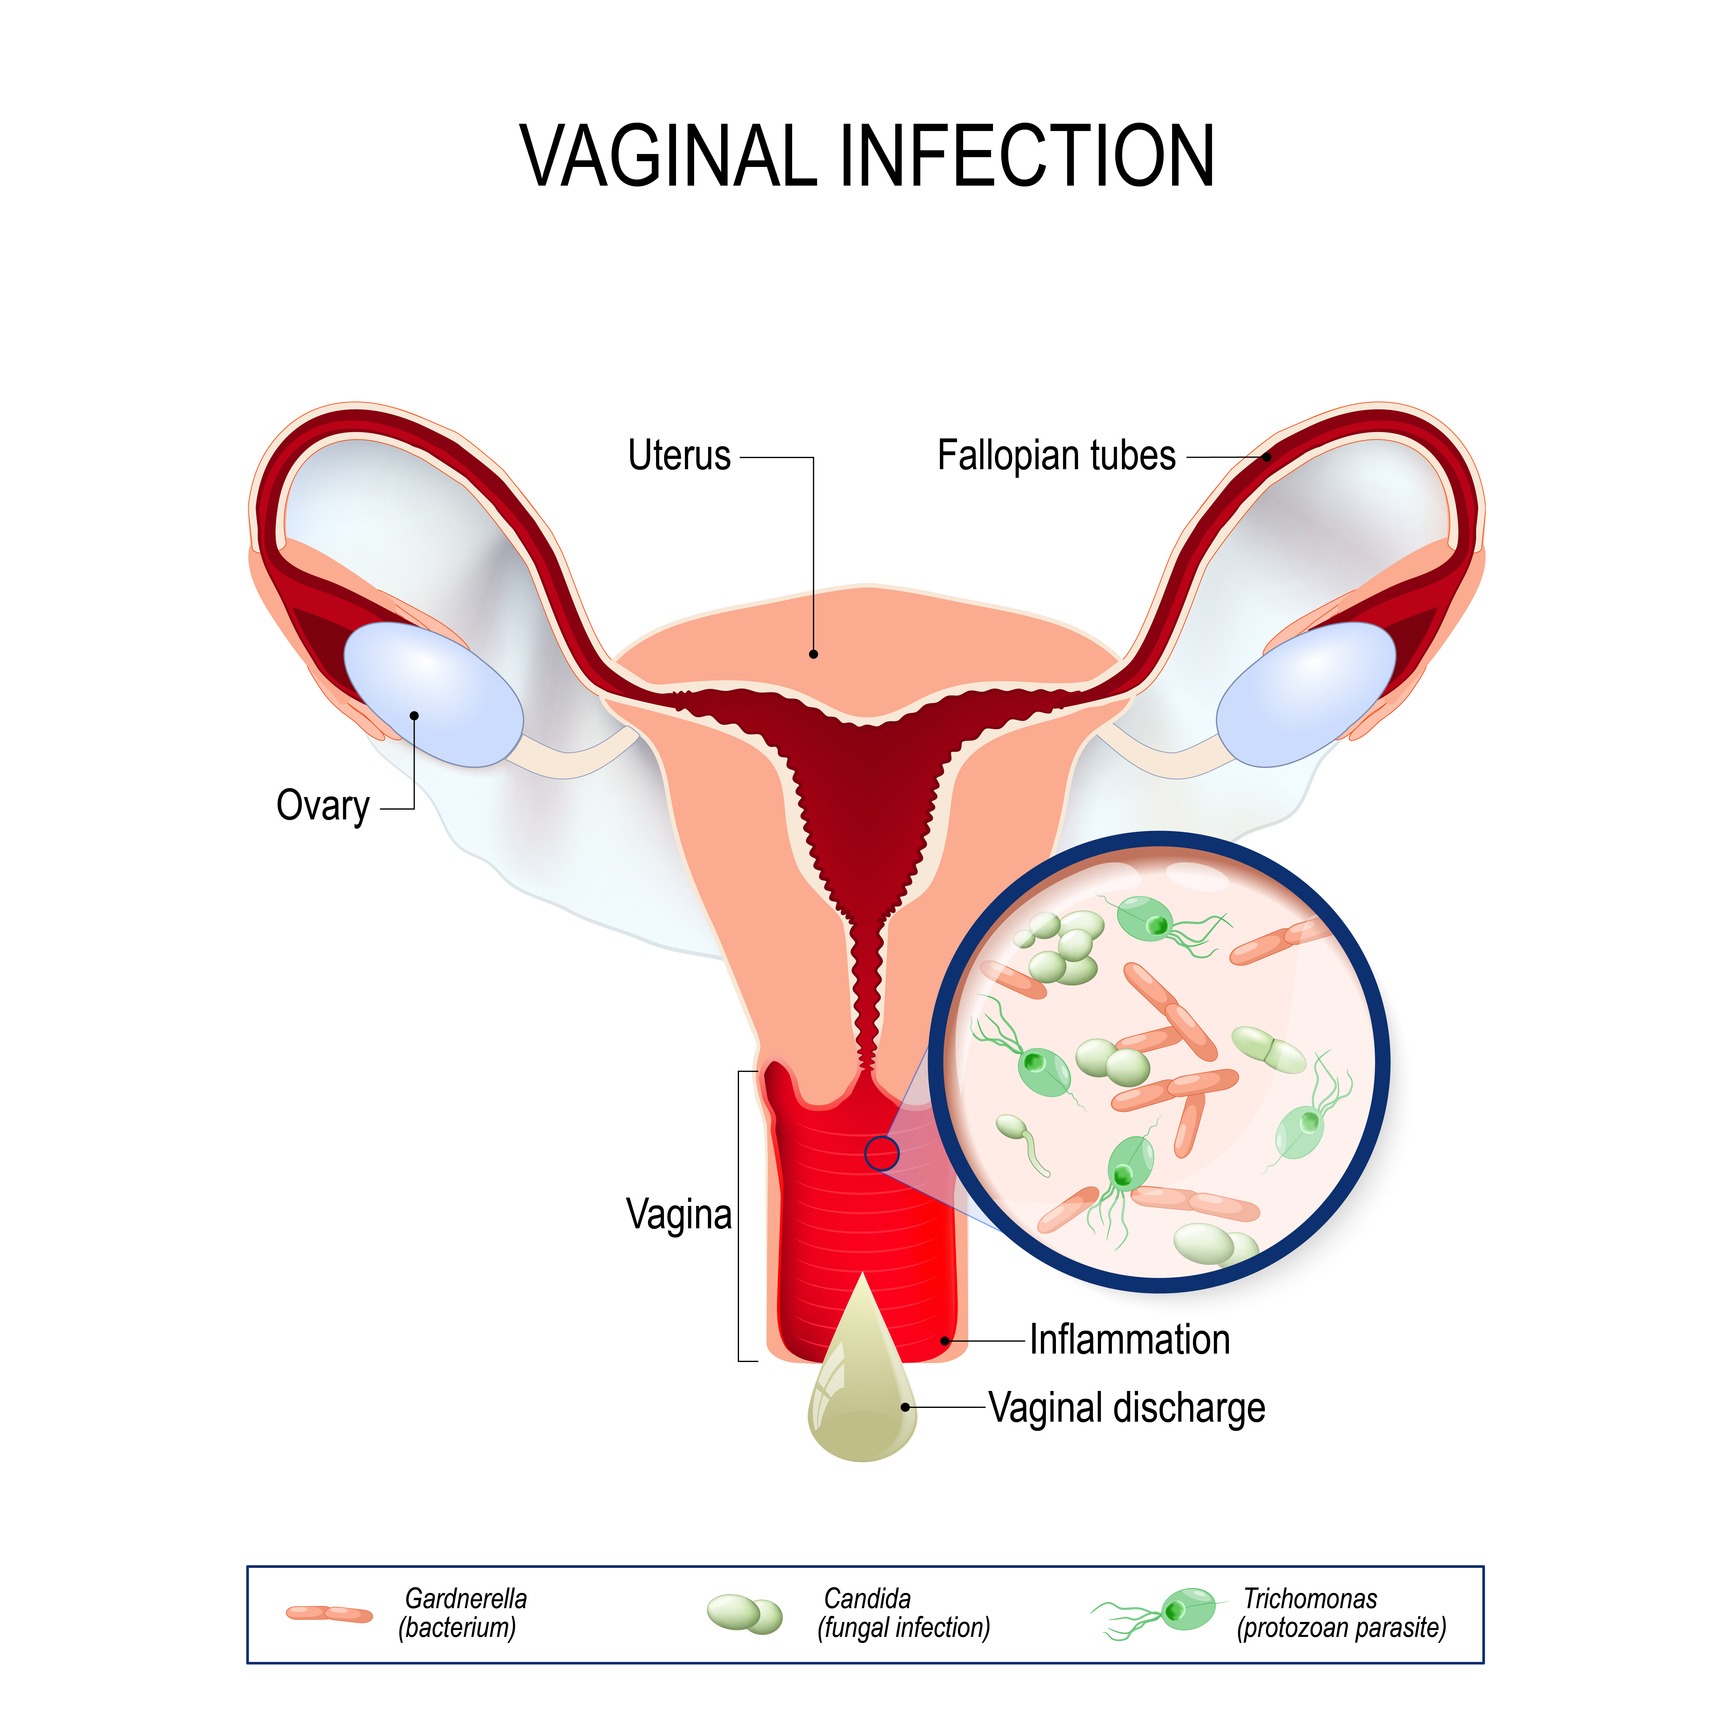 Vaginite : Causes, symptômes et traitement